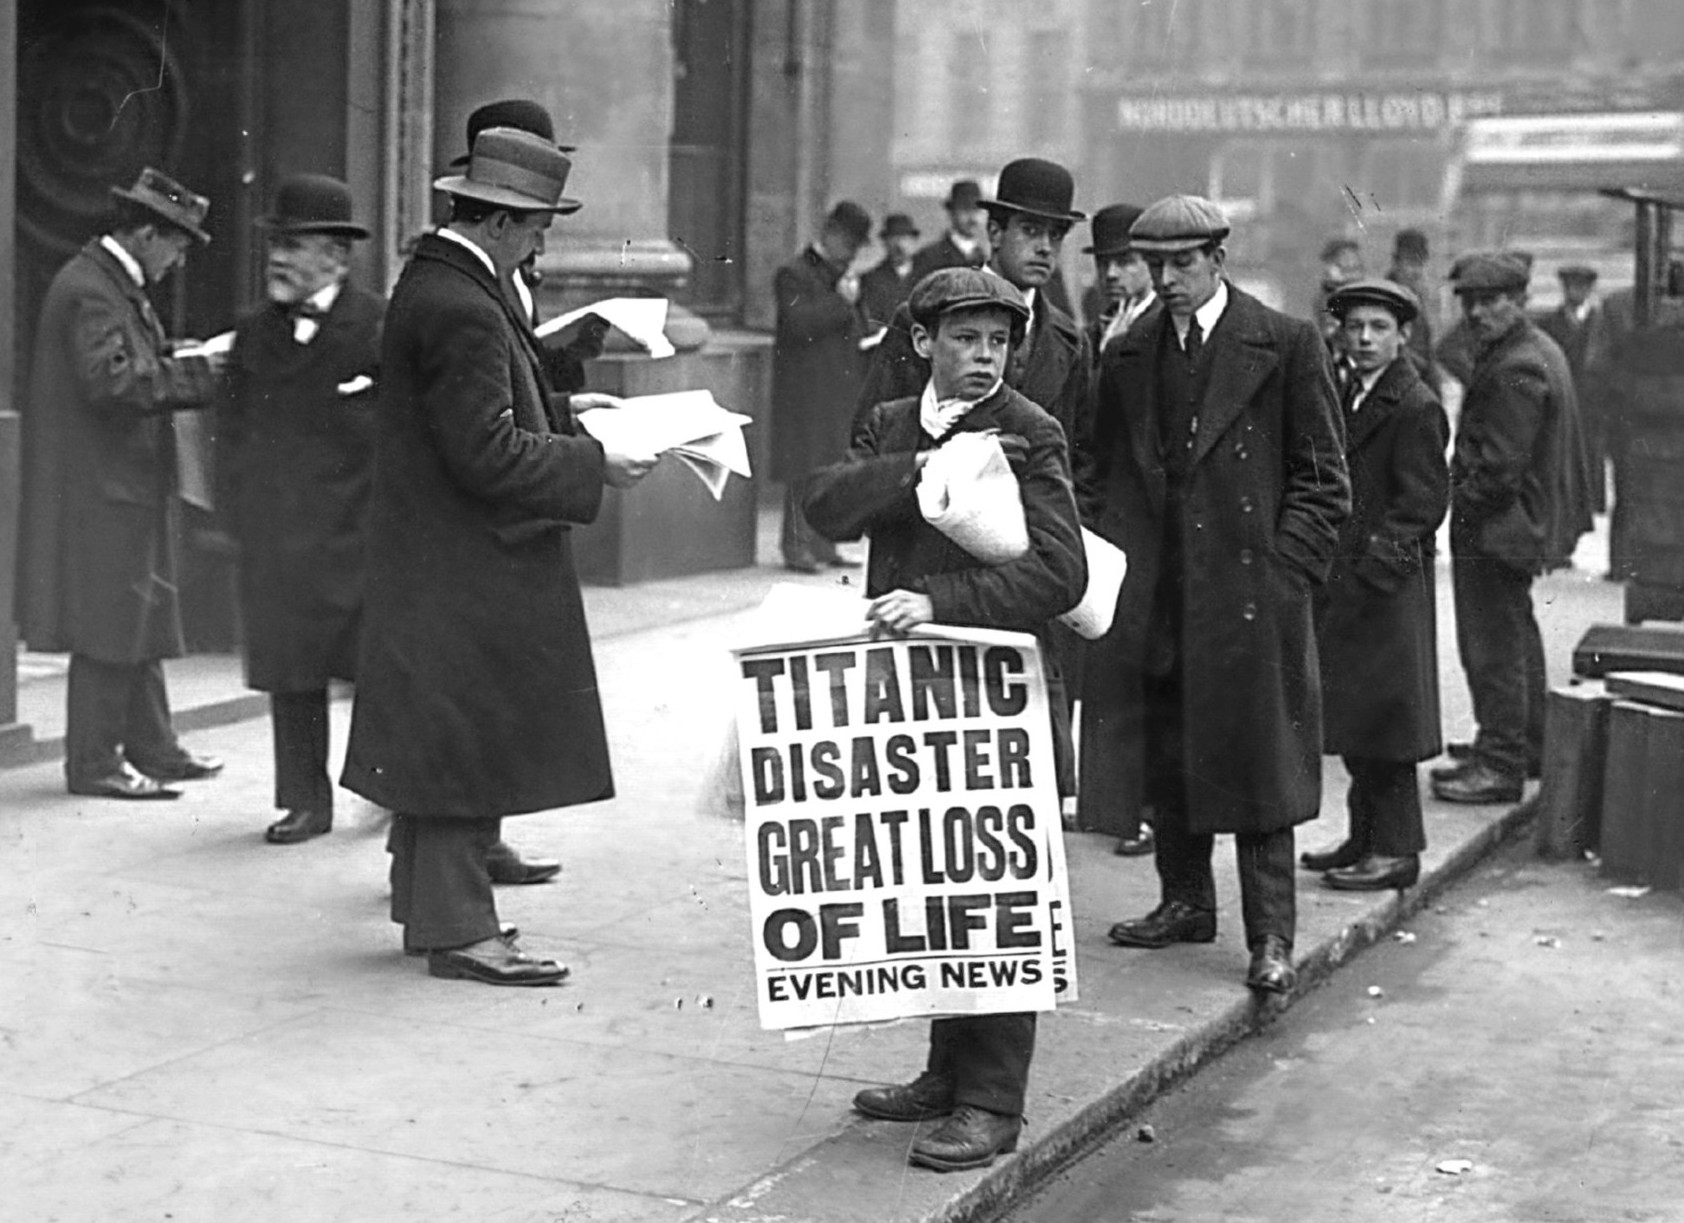 Un niño vende periódicos anunciando la tragedia del Titanic.